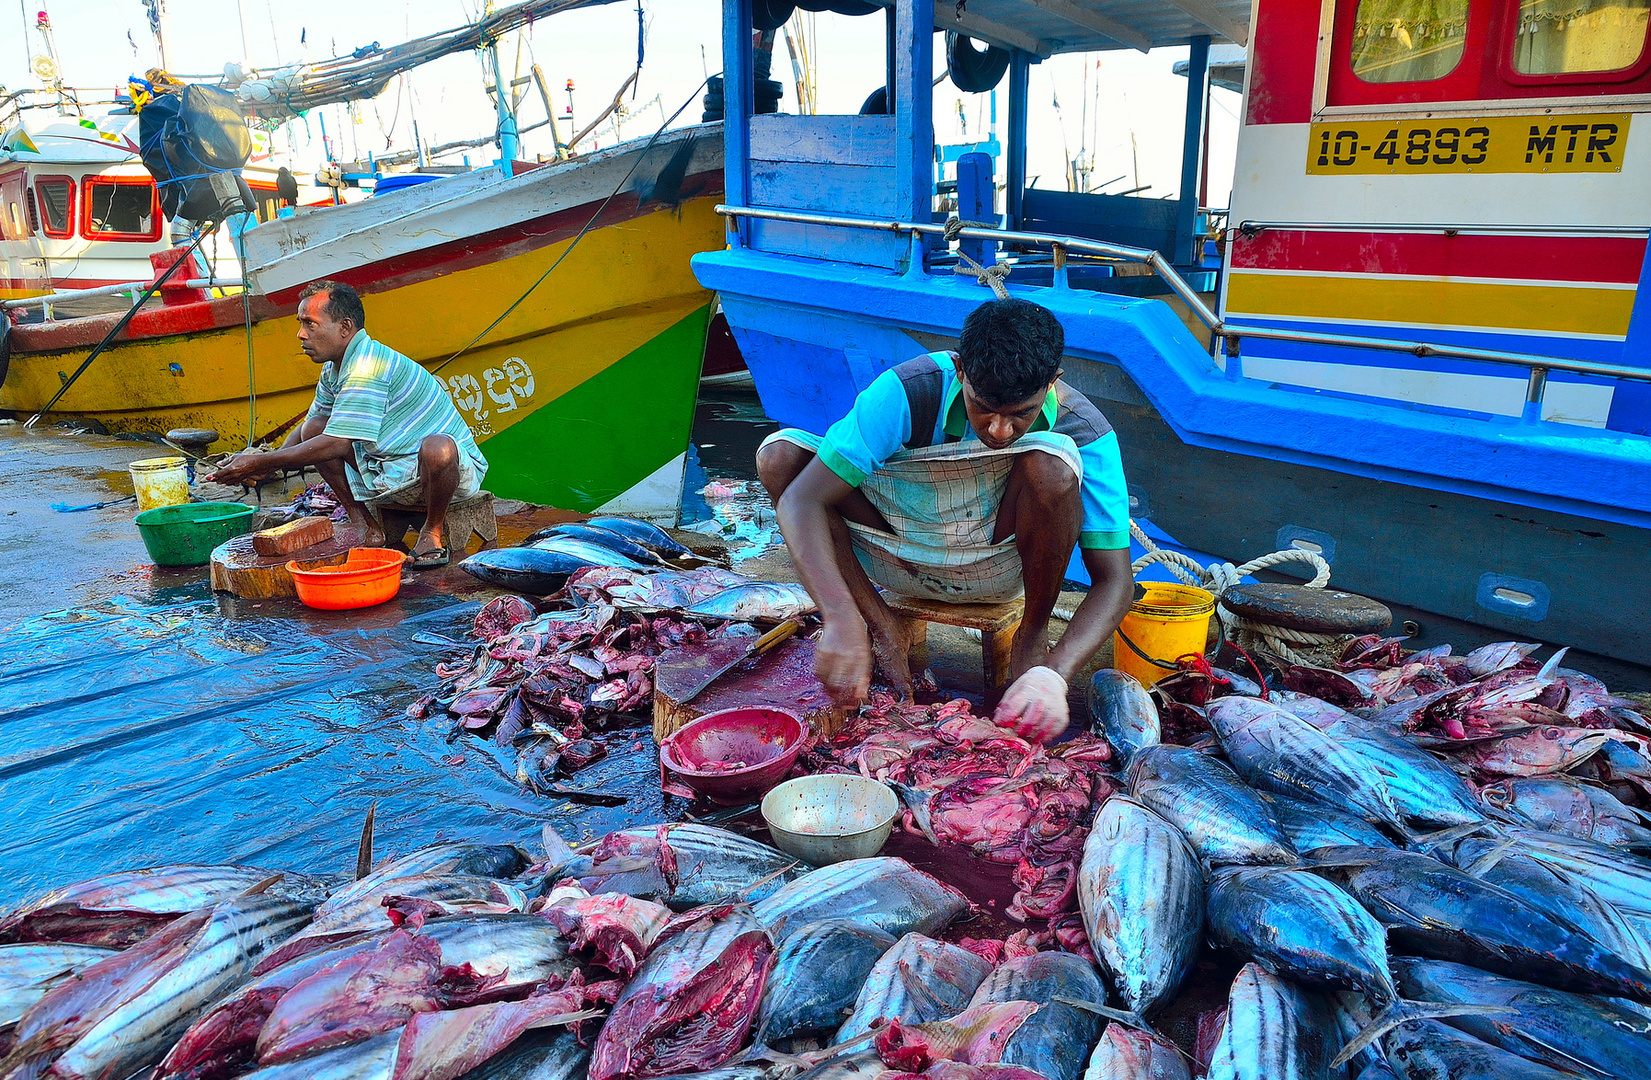 Fish market.